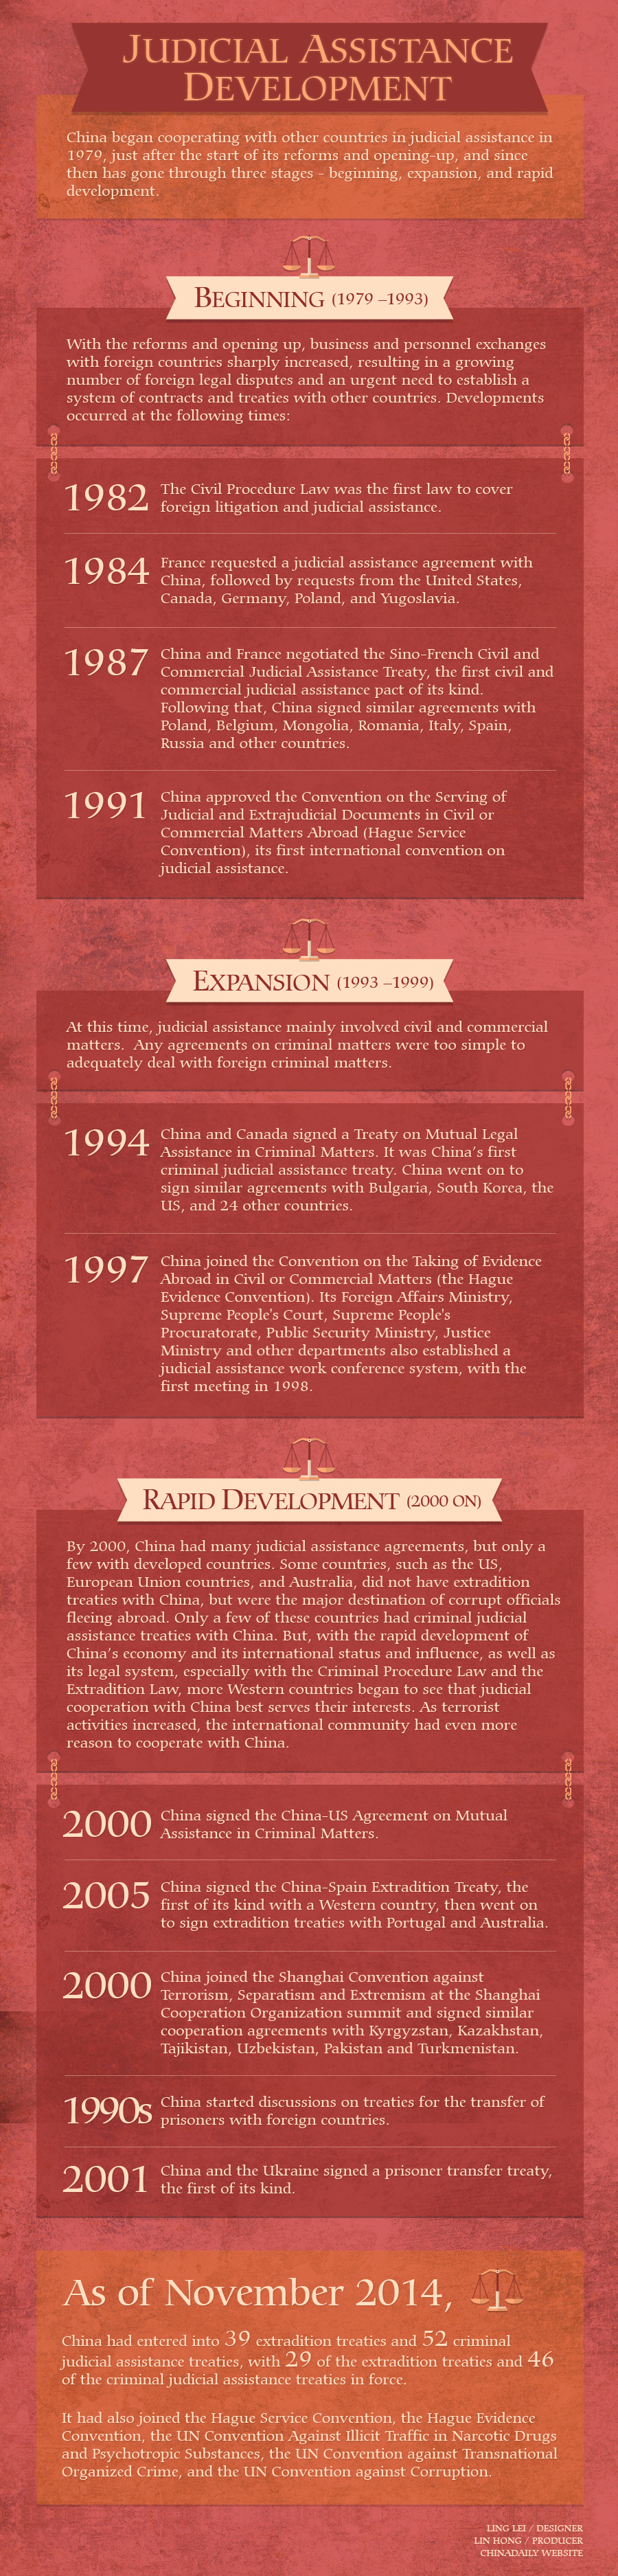 Development of China's judicial assistance